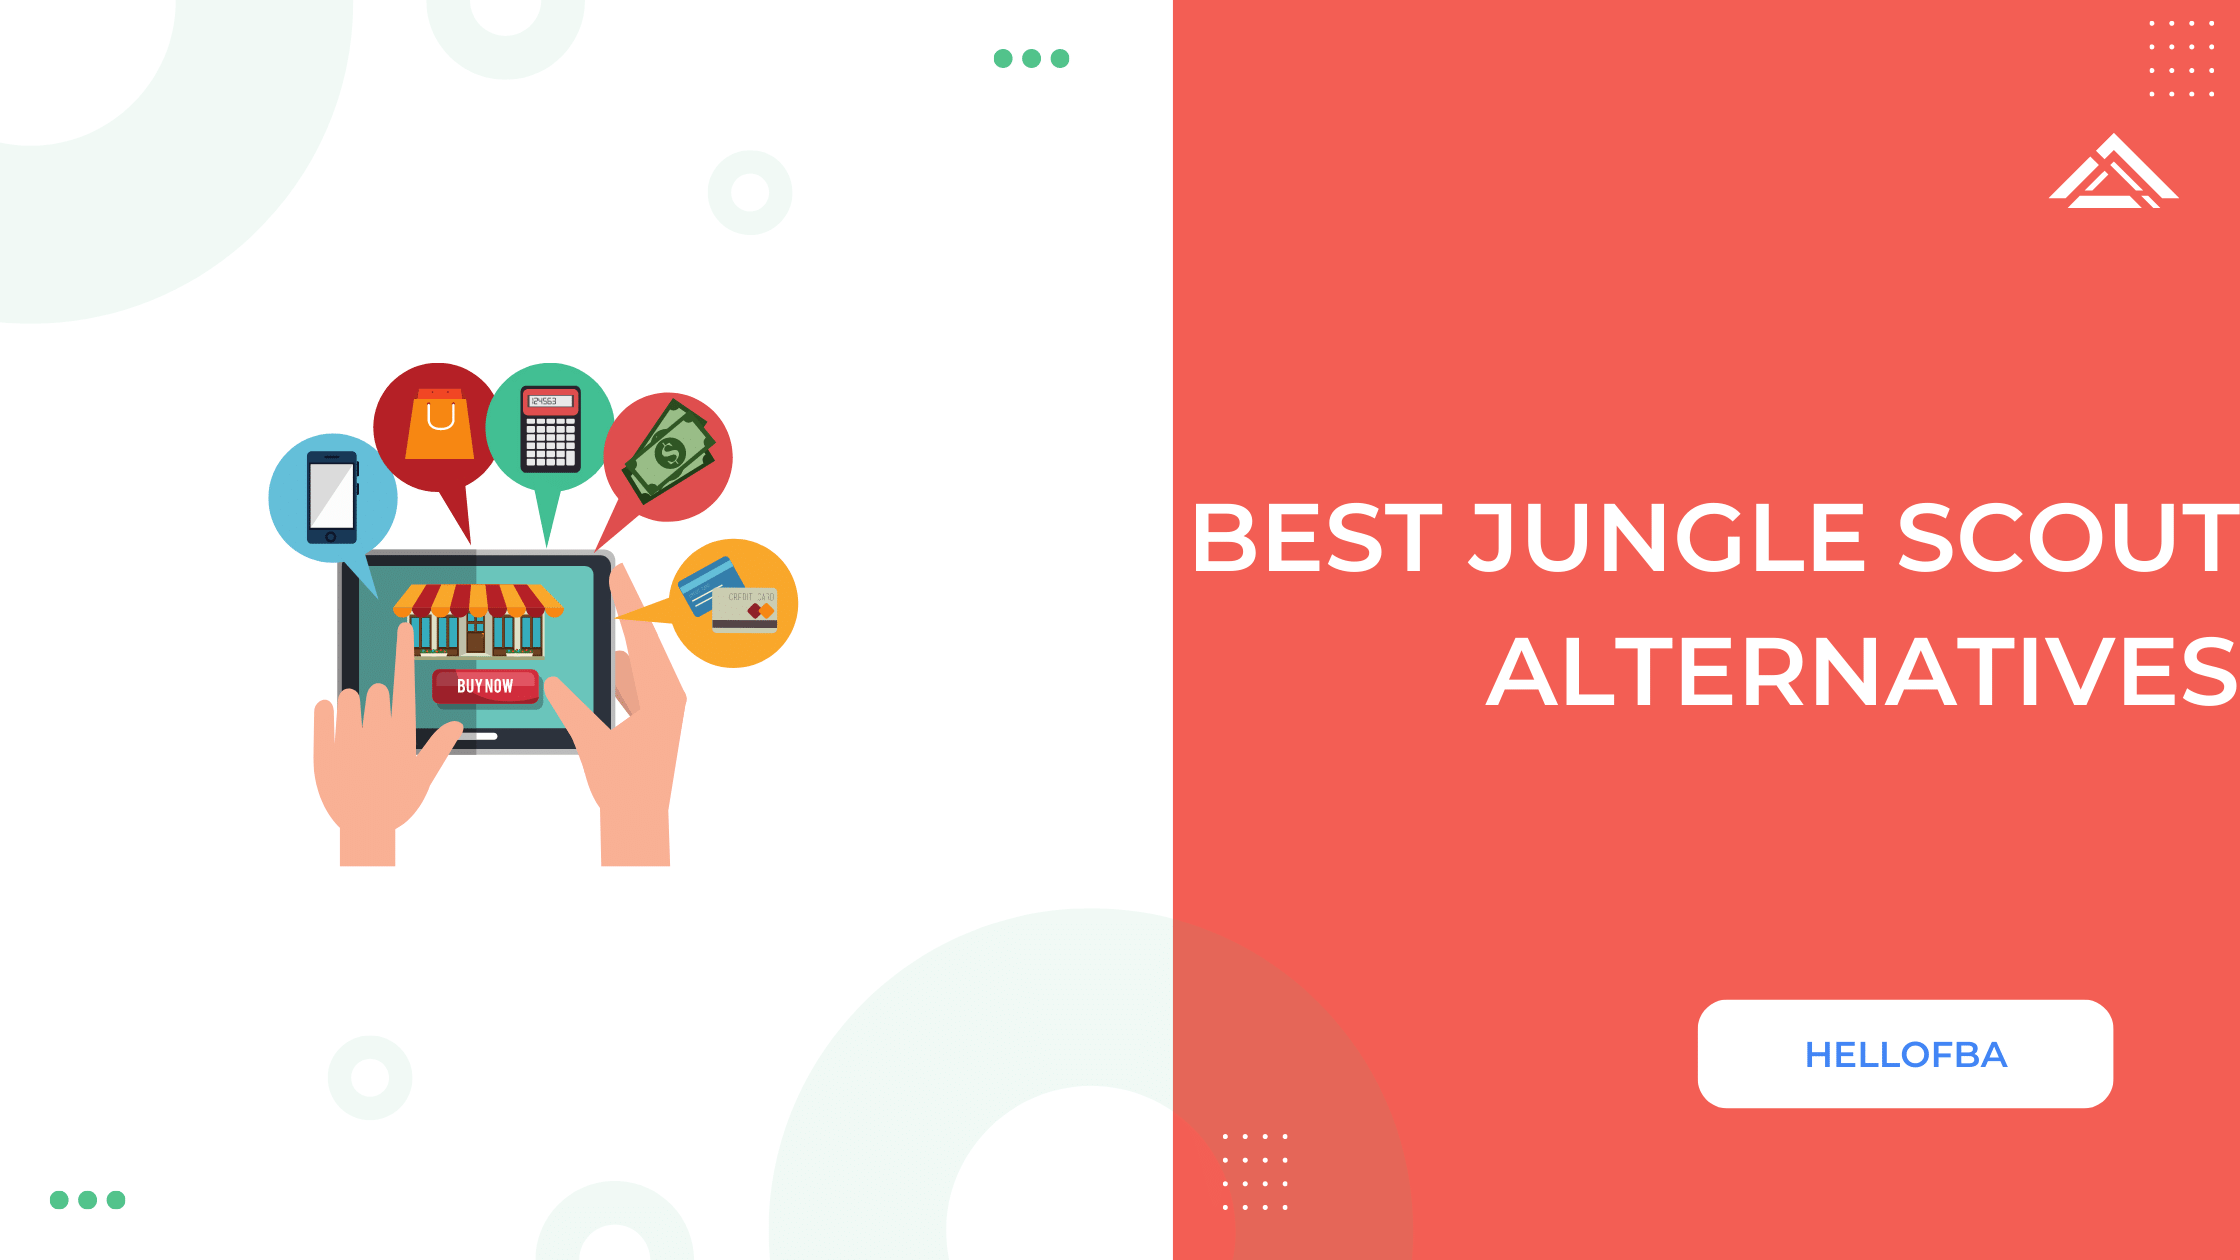 Best Jungle Scout Alternatives - HelloFBA